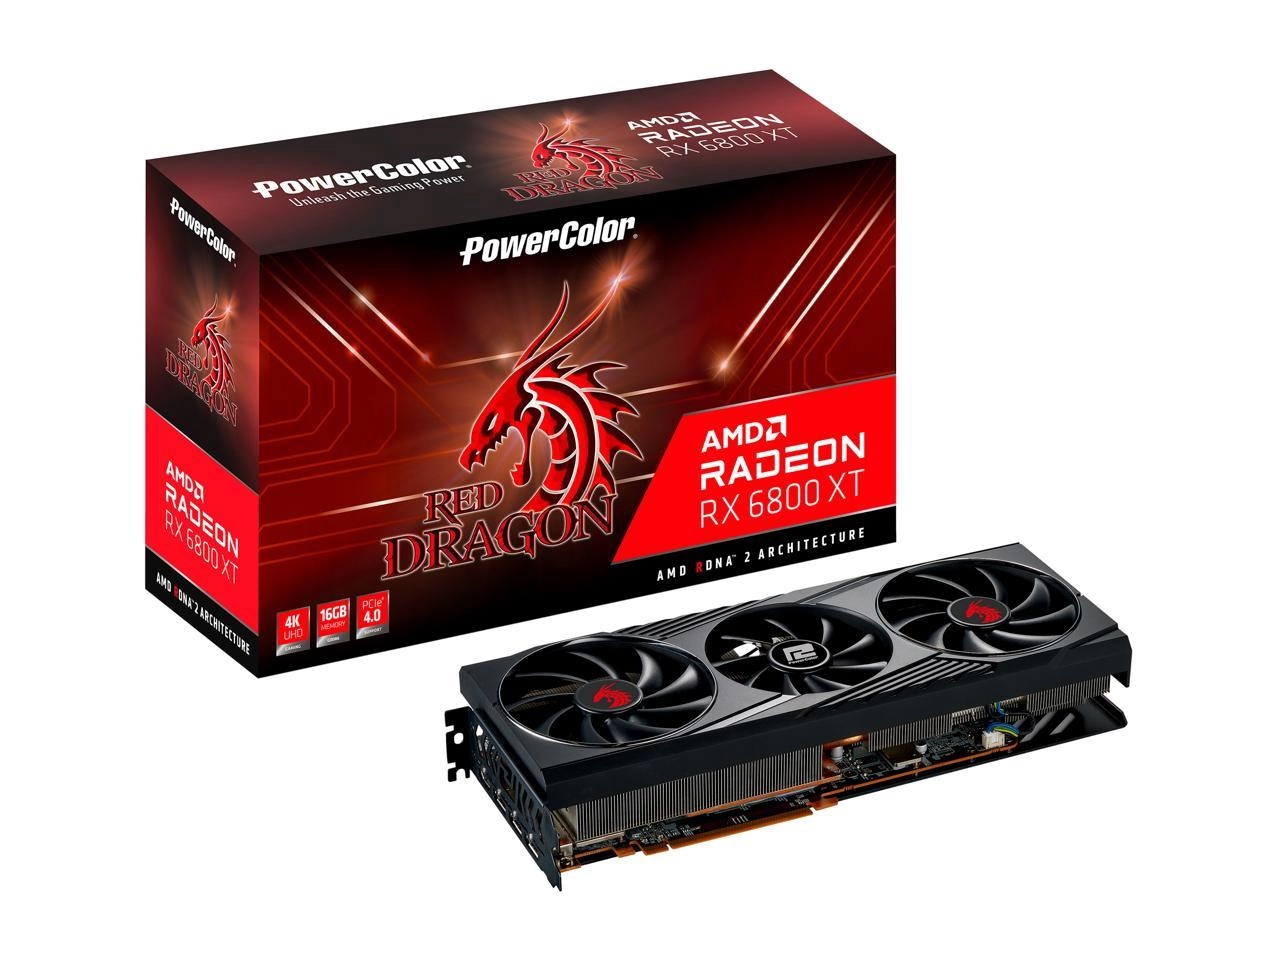 PowerColor Red Dragon AMD Radeon RX 6800 XT 16GB GDDR6 Package